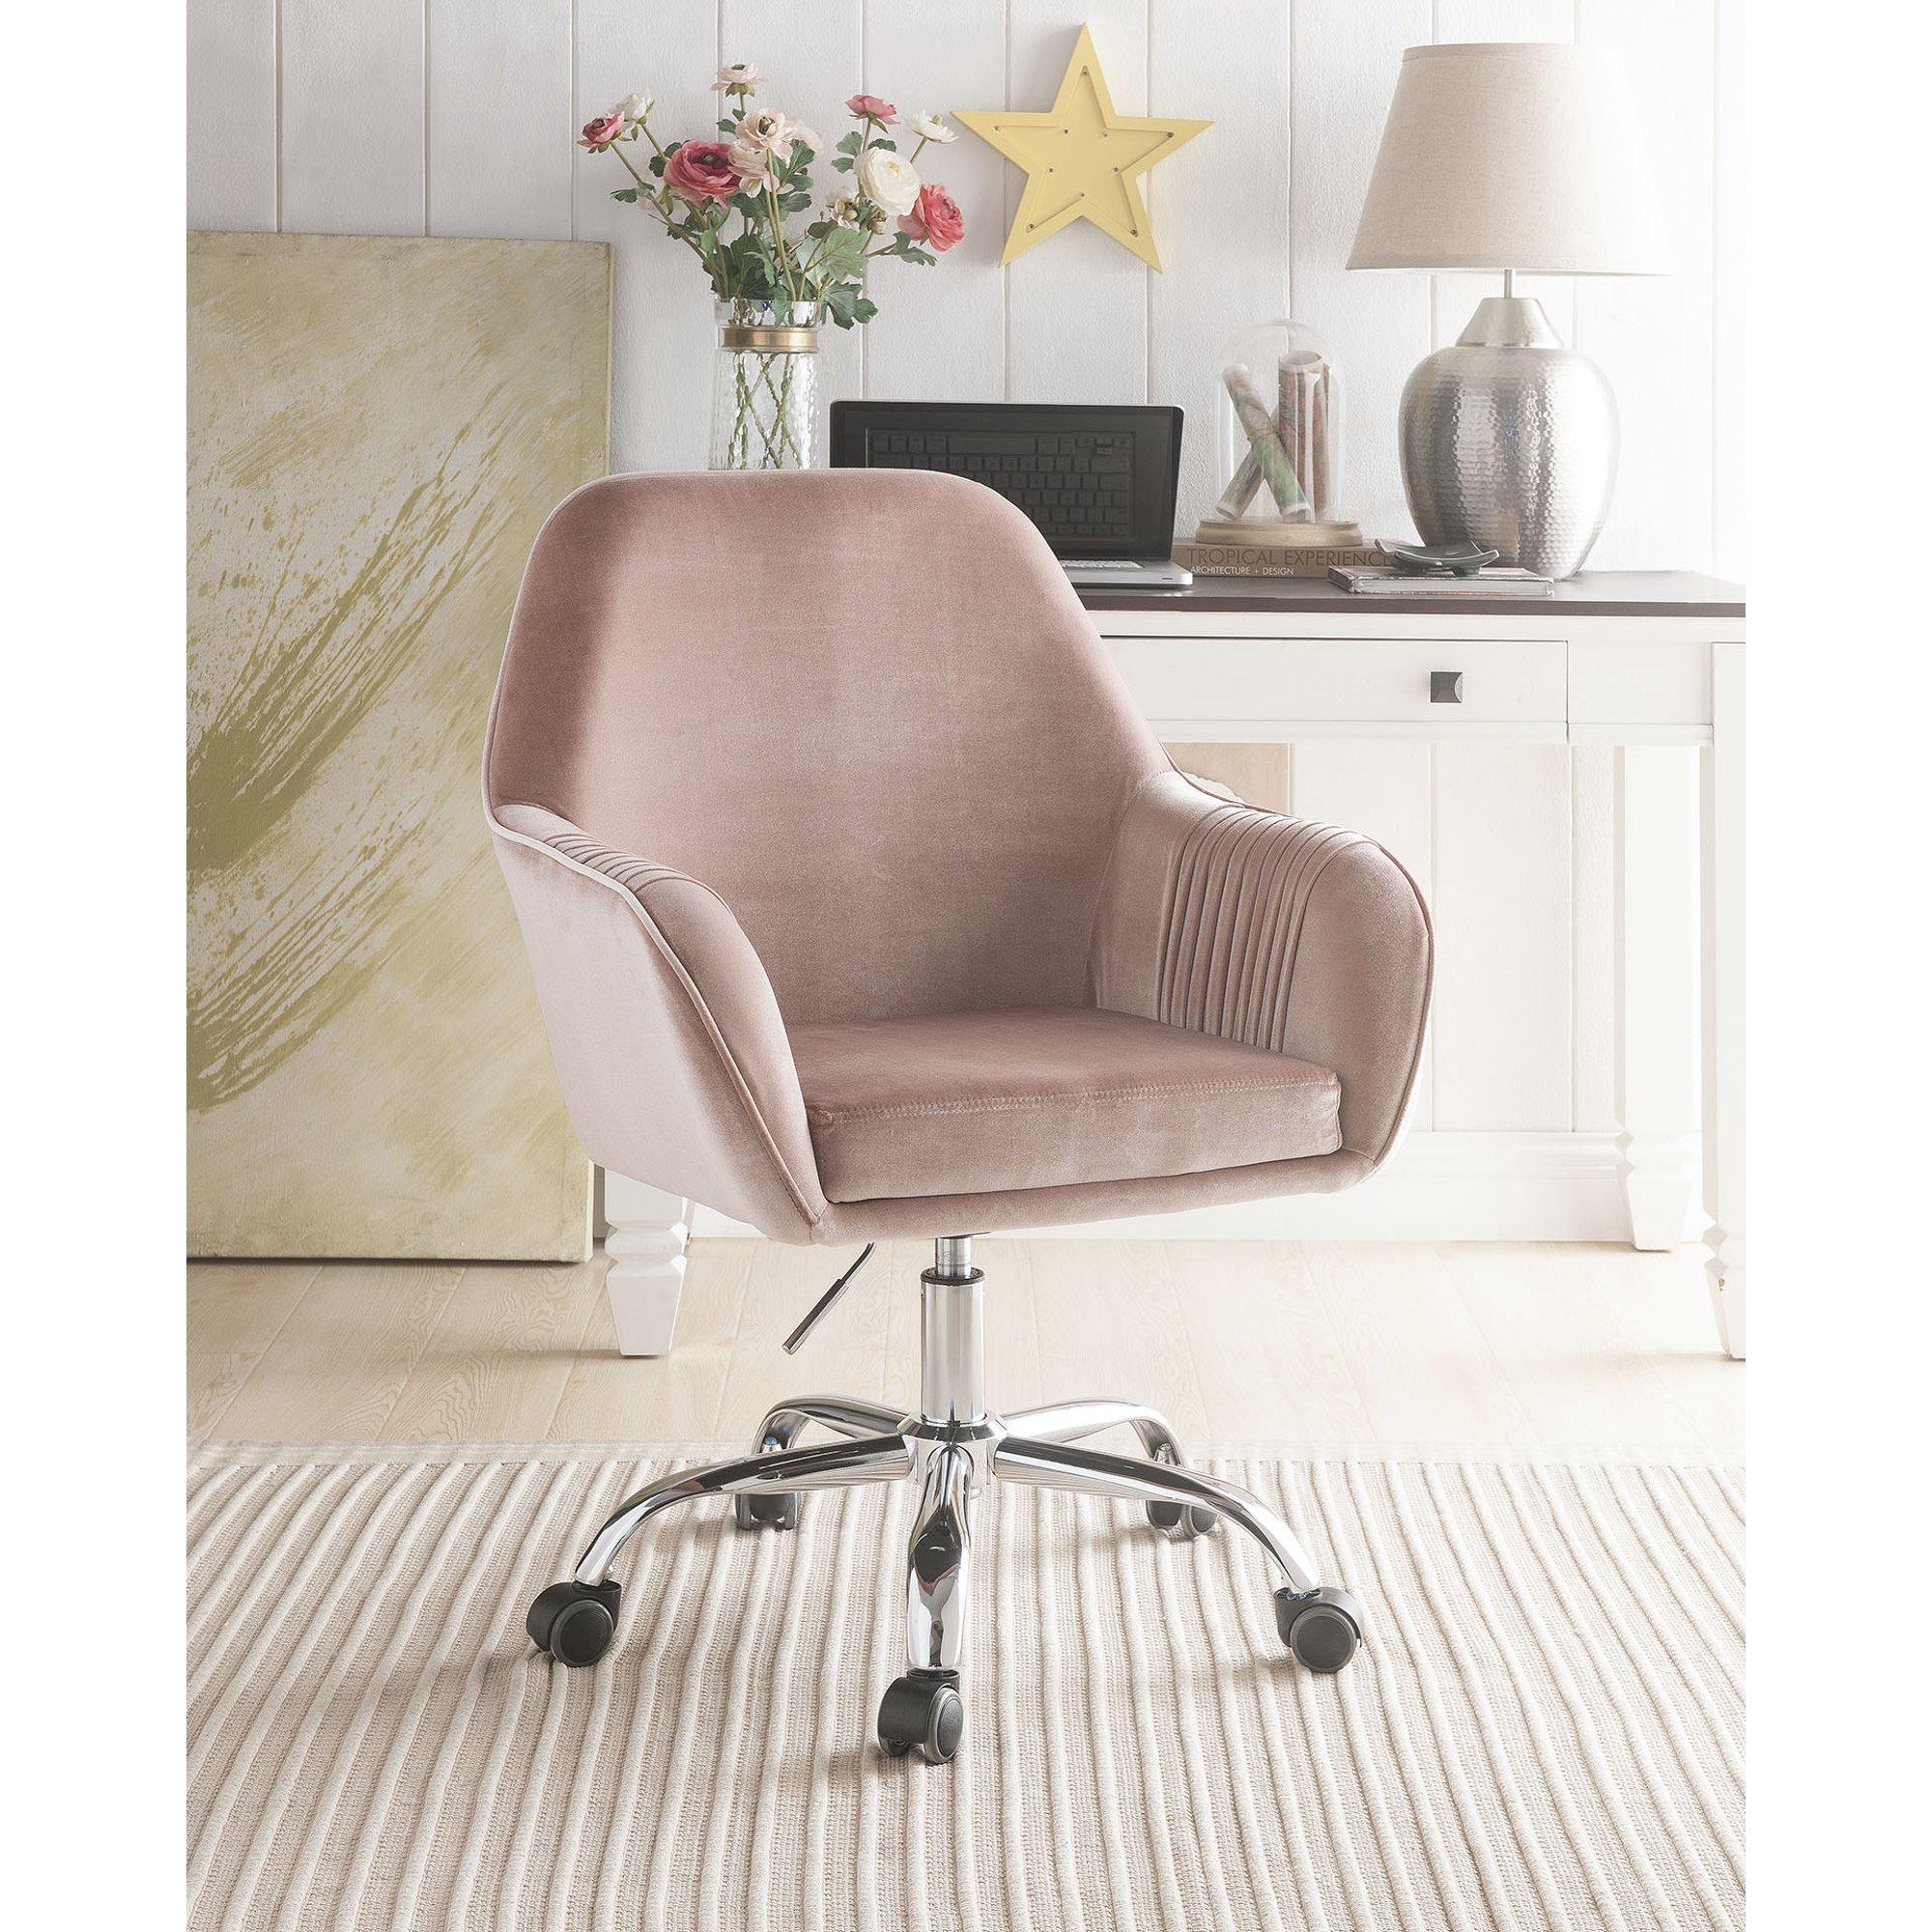 

    
Eimer Home Office Chair
